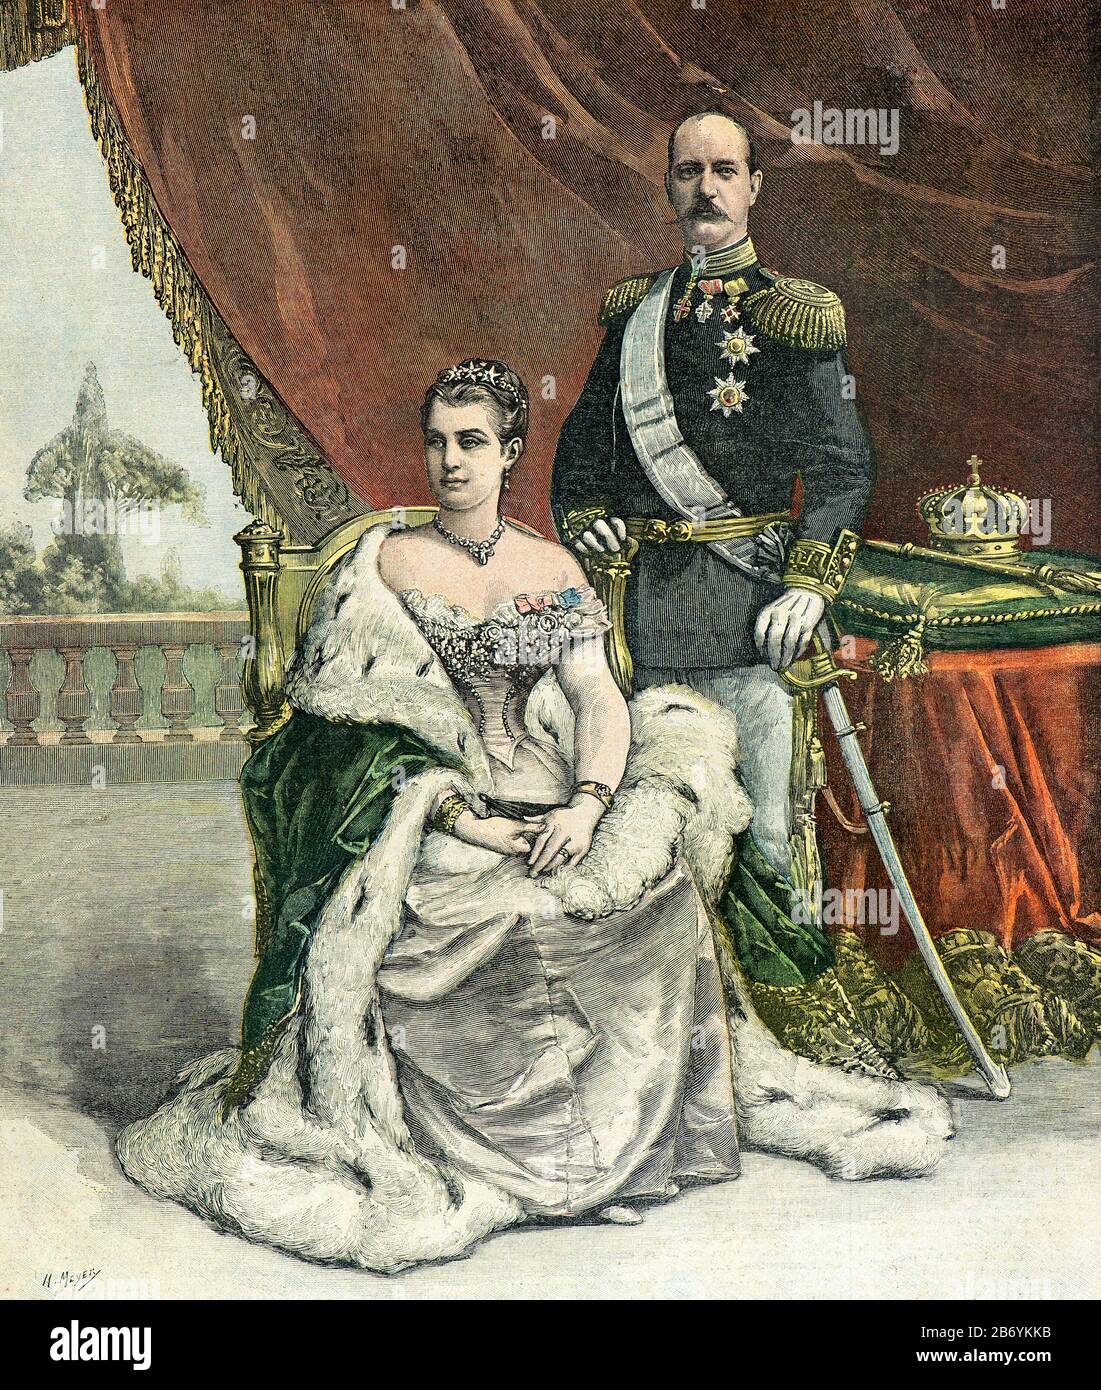 Unknown Person - Queen Olga of the Hellenes (1851-1926)